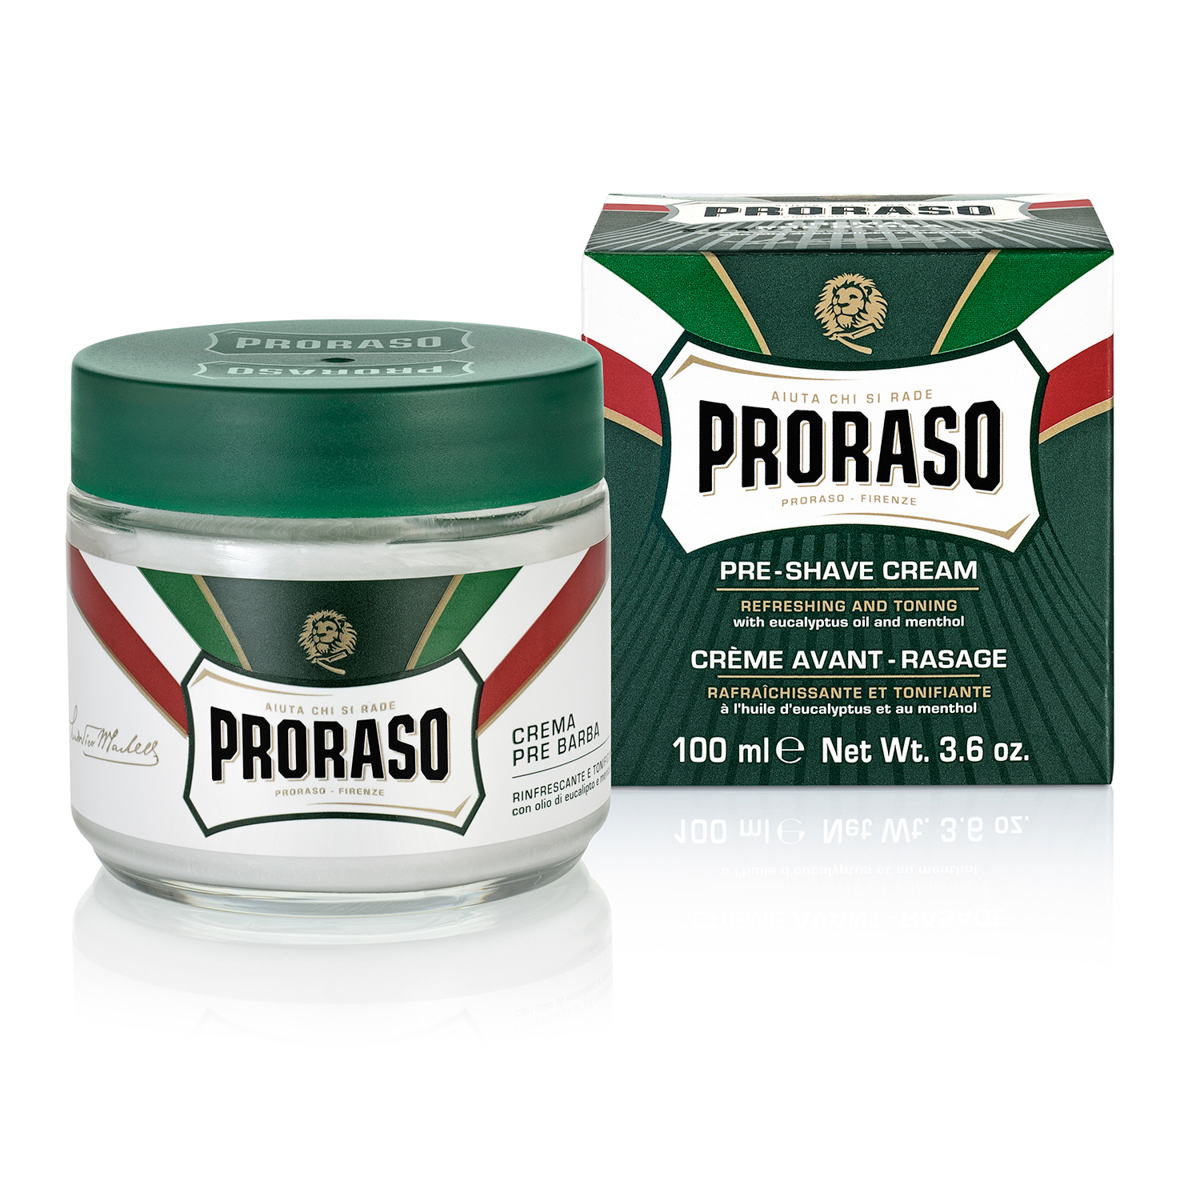 Proraso Preshave Cream - Refresh, Eucalyptus & Menthol, 100 ml